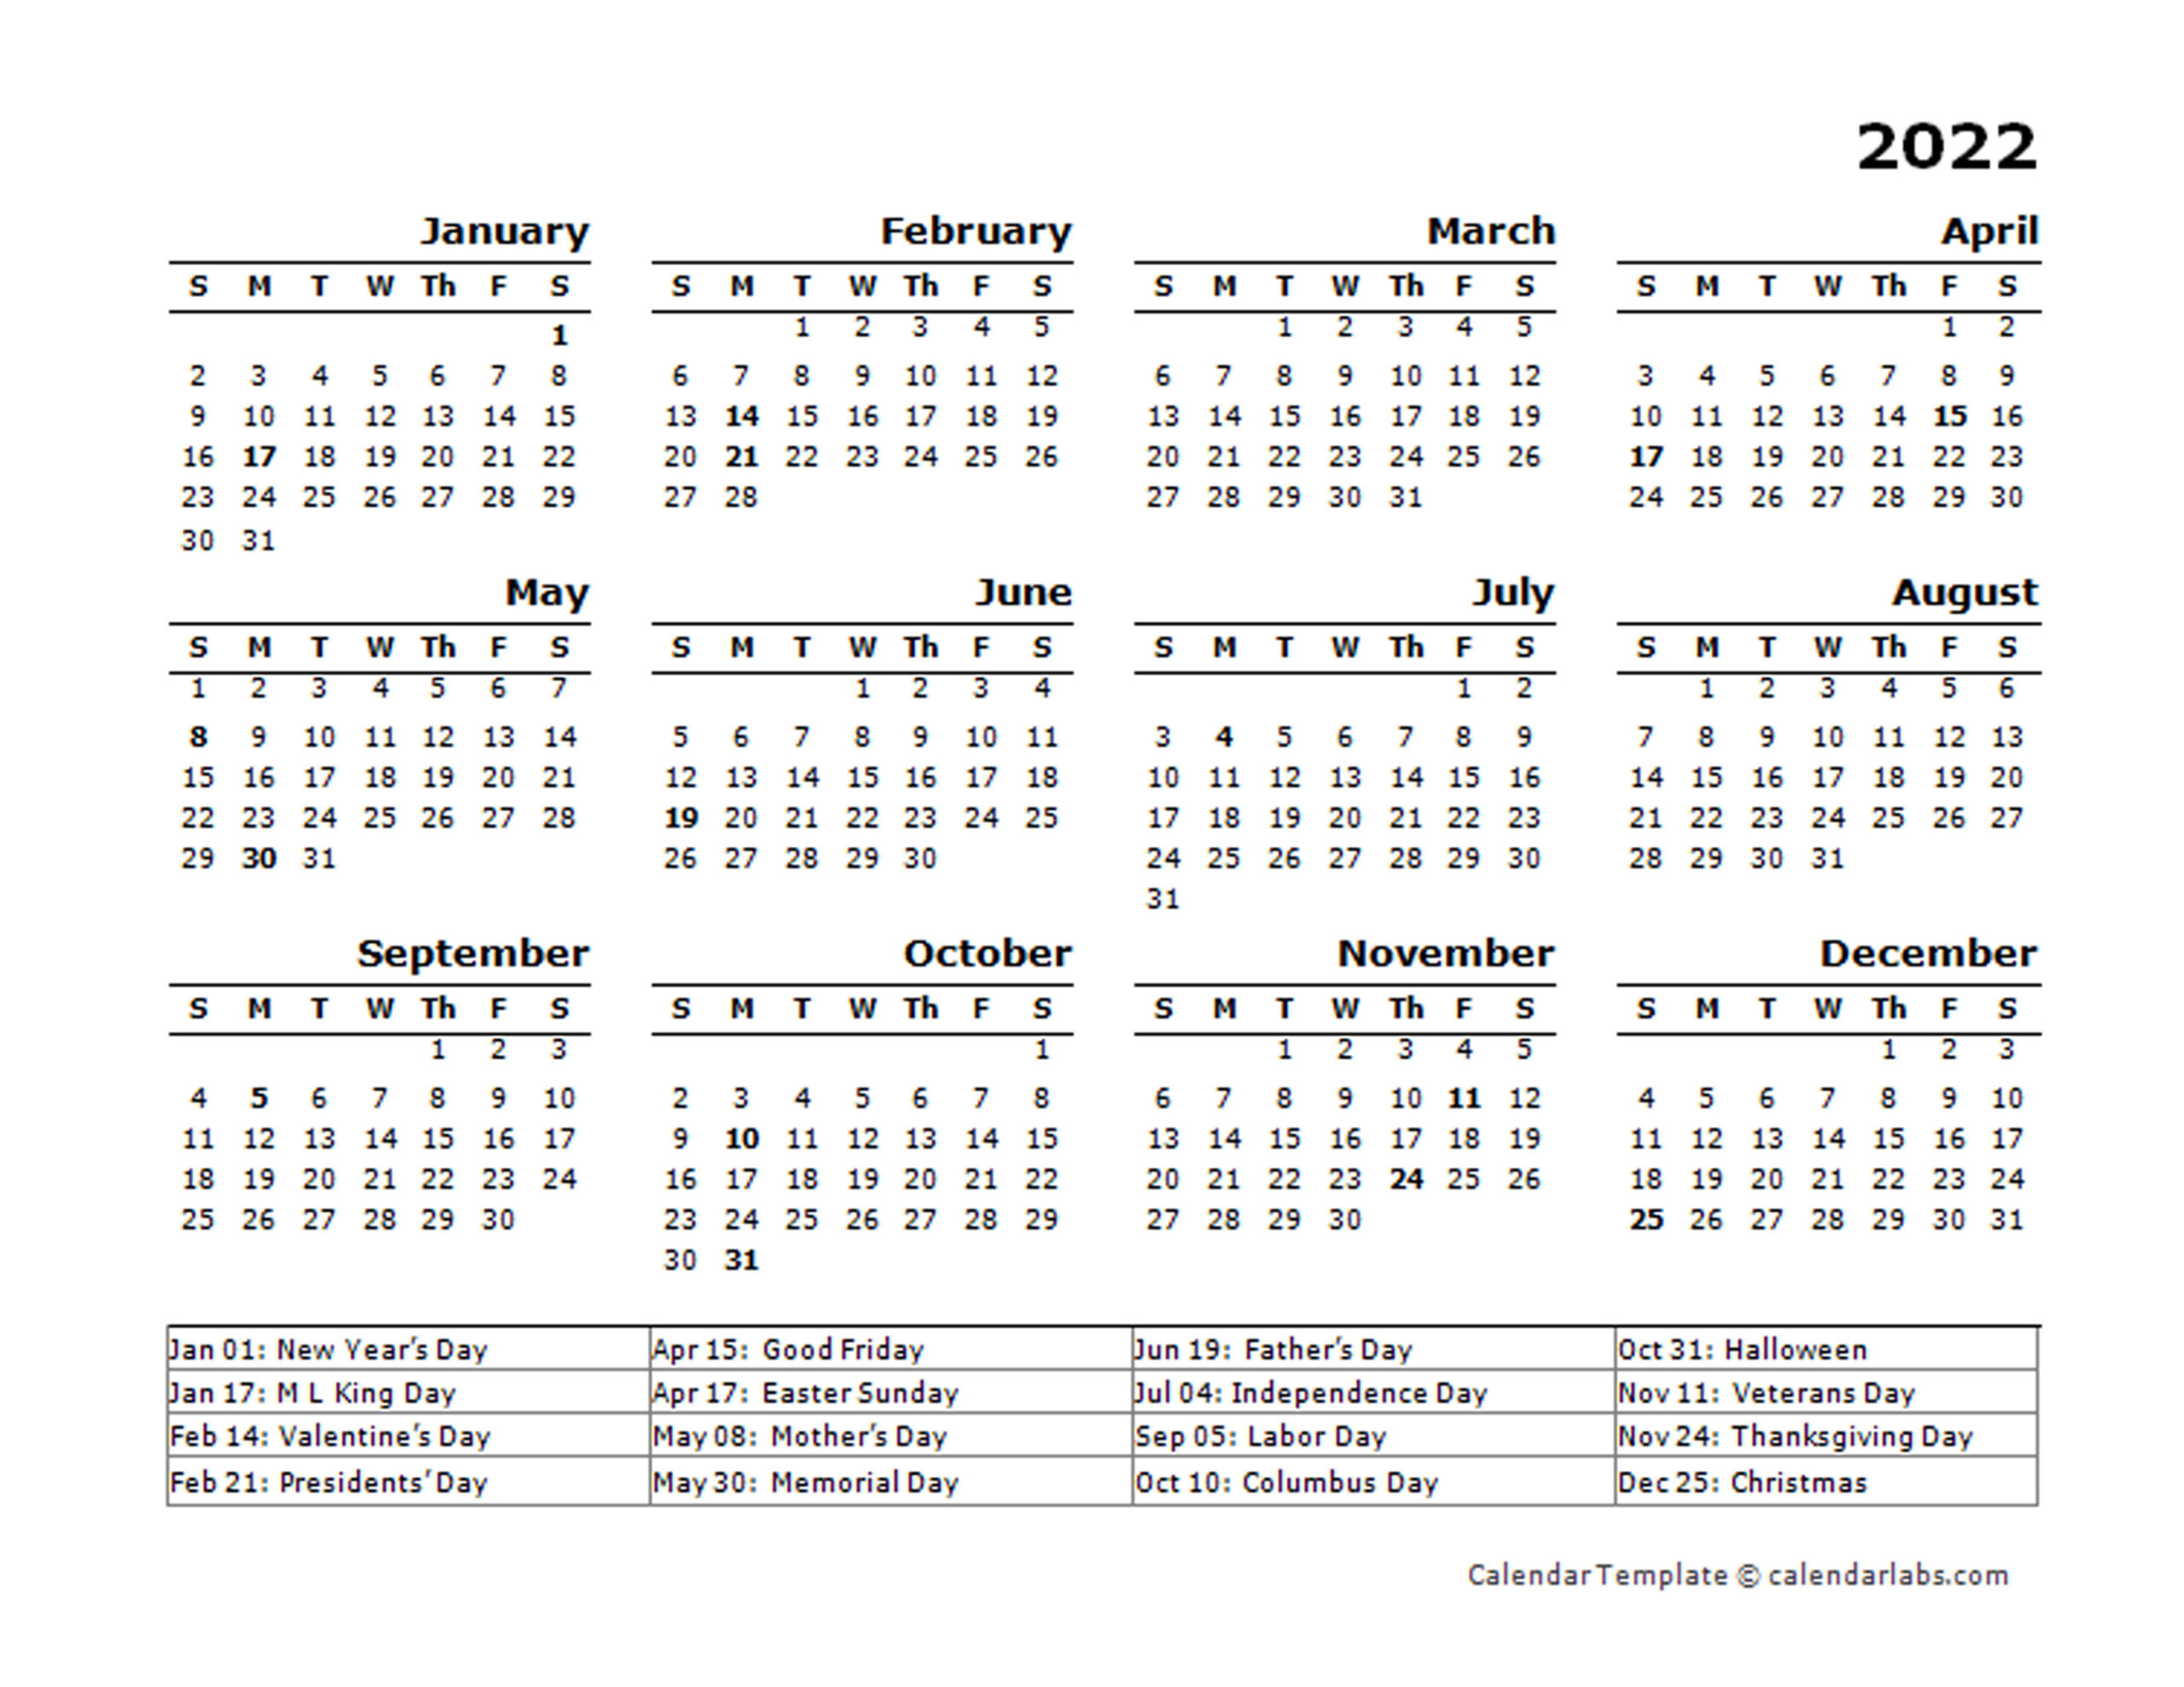 2022 Yearly Calendar Template With Us Holidays - Free  2022 Calendar Printable Hong Kong